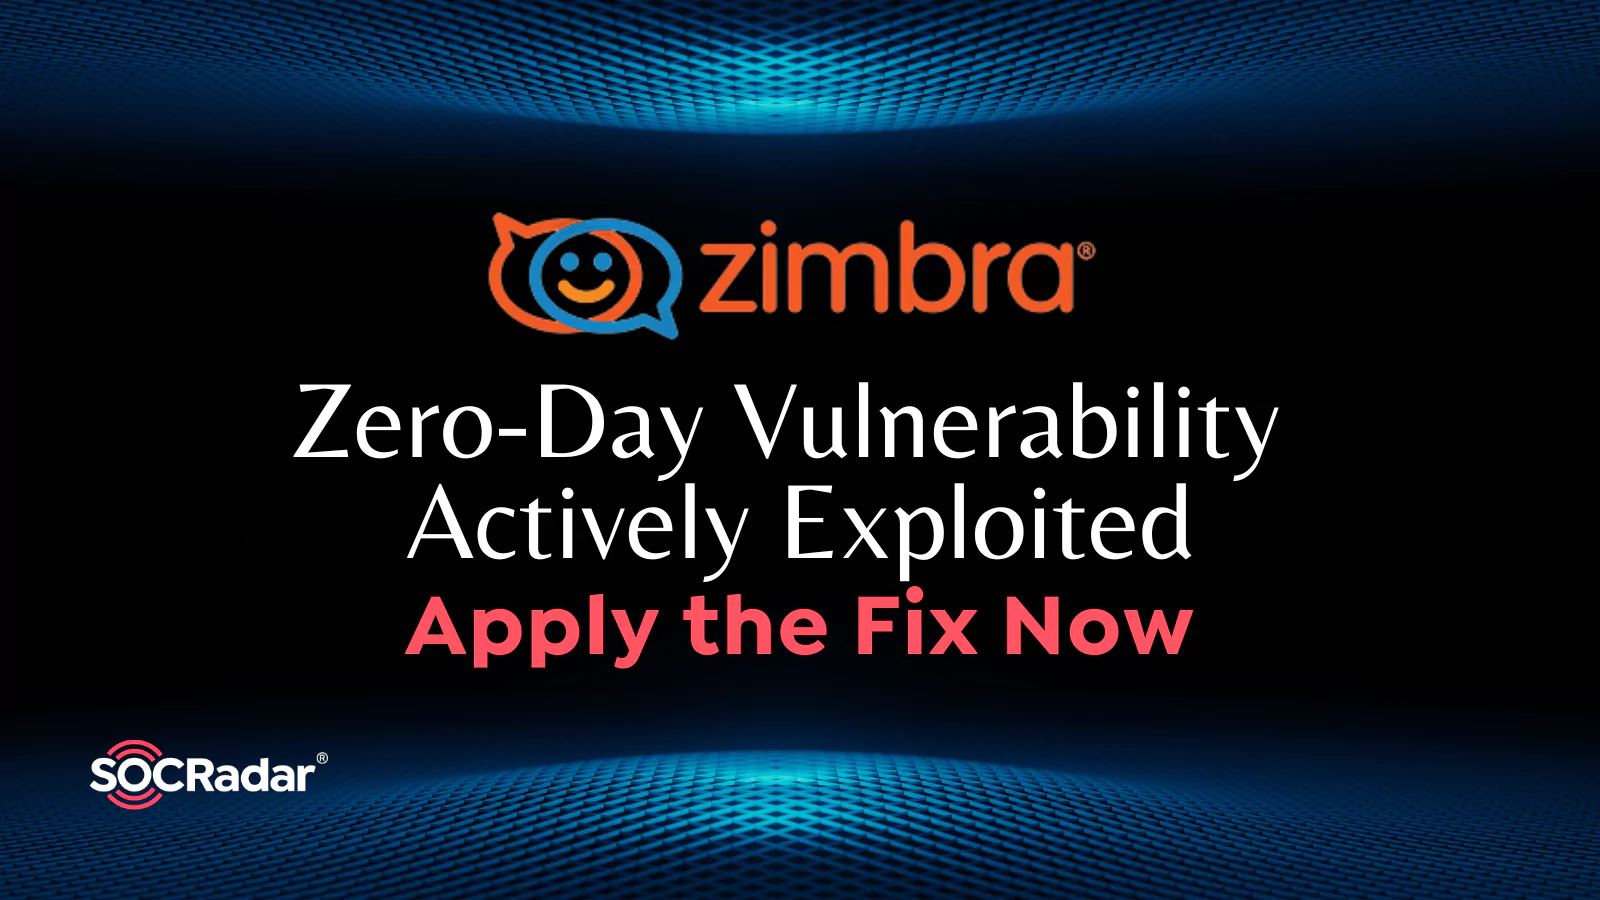 SOCRadar® Cyber Intelligence Inc. | Zimbra Zero-Day Vulnerability Actively Exploited, Apply the Fix Now